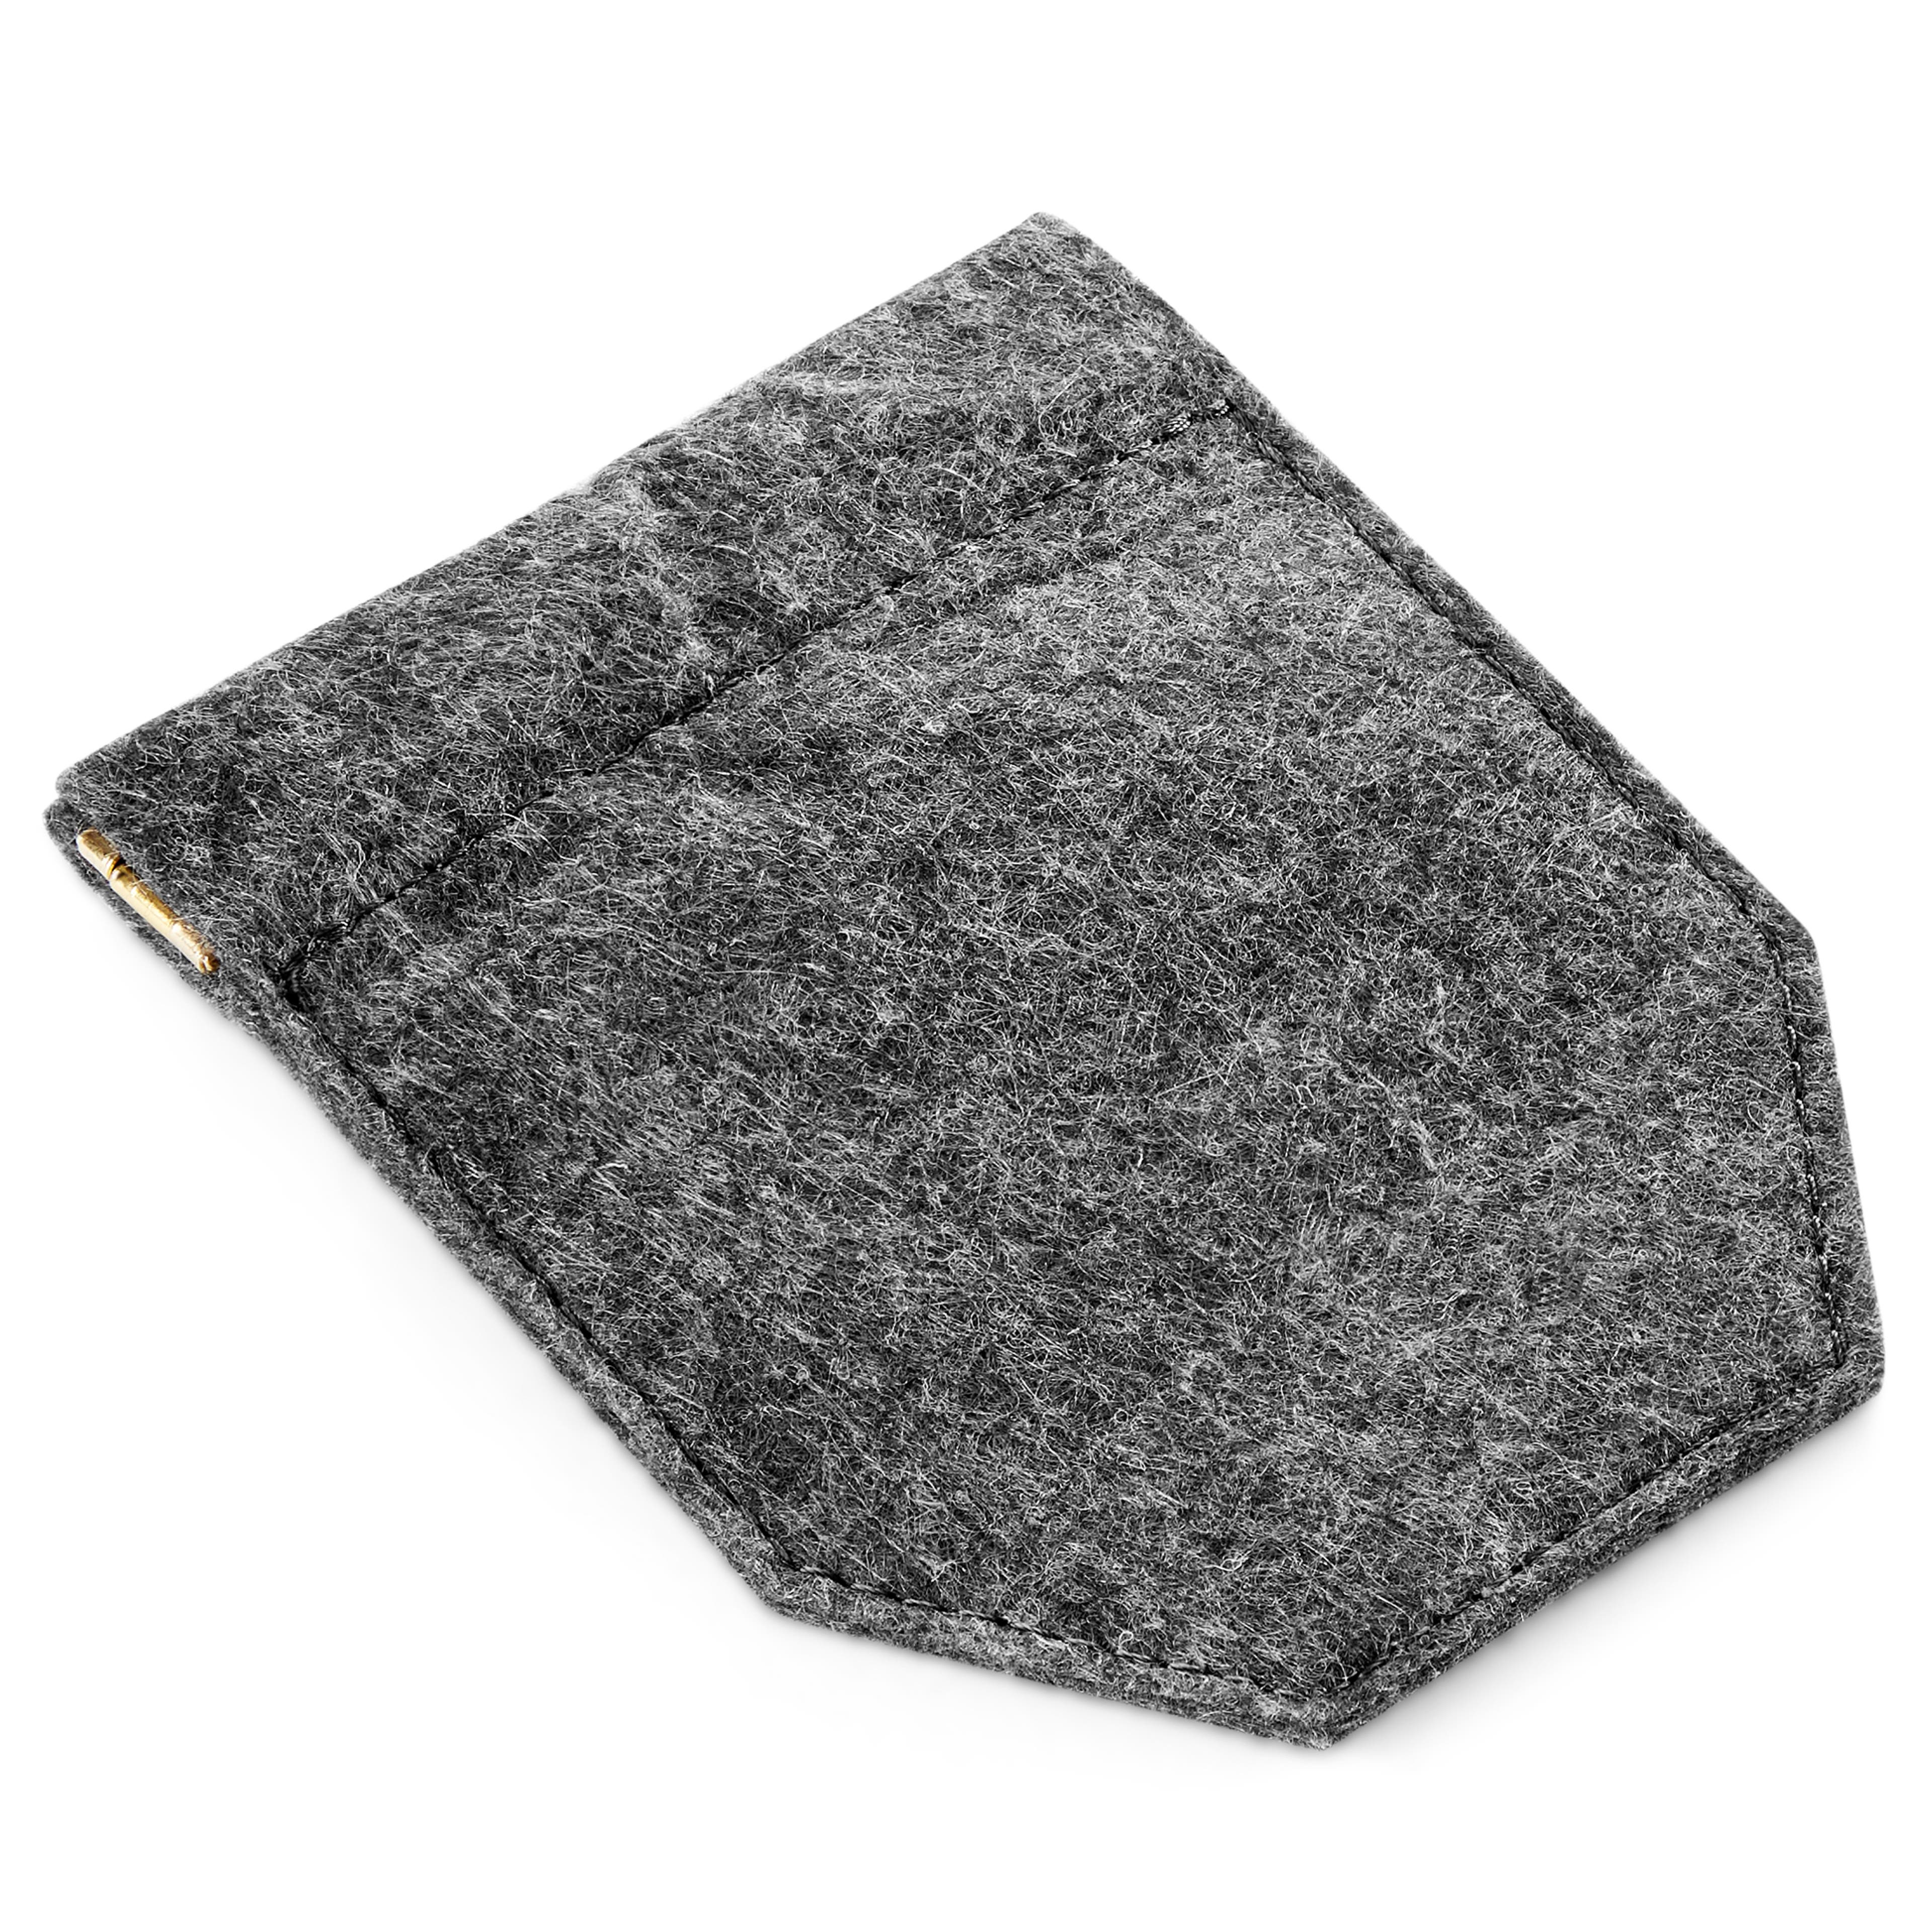 Pack de 5 soportes para pañuelos de bolsillo de fieltro gris